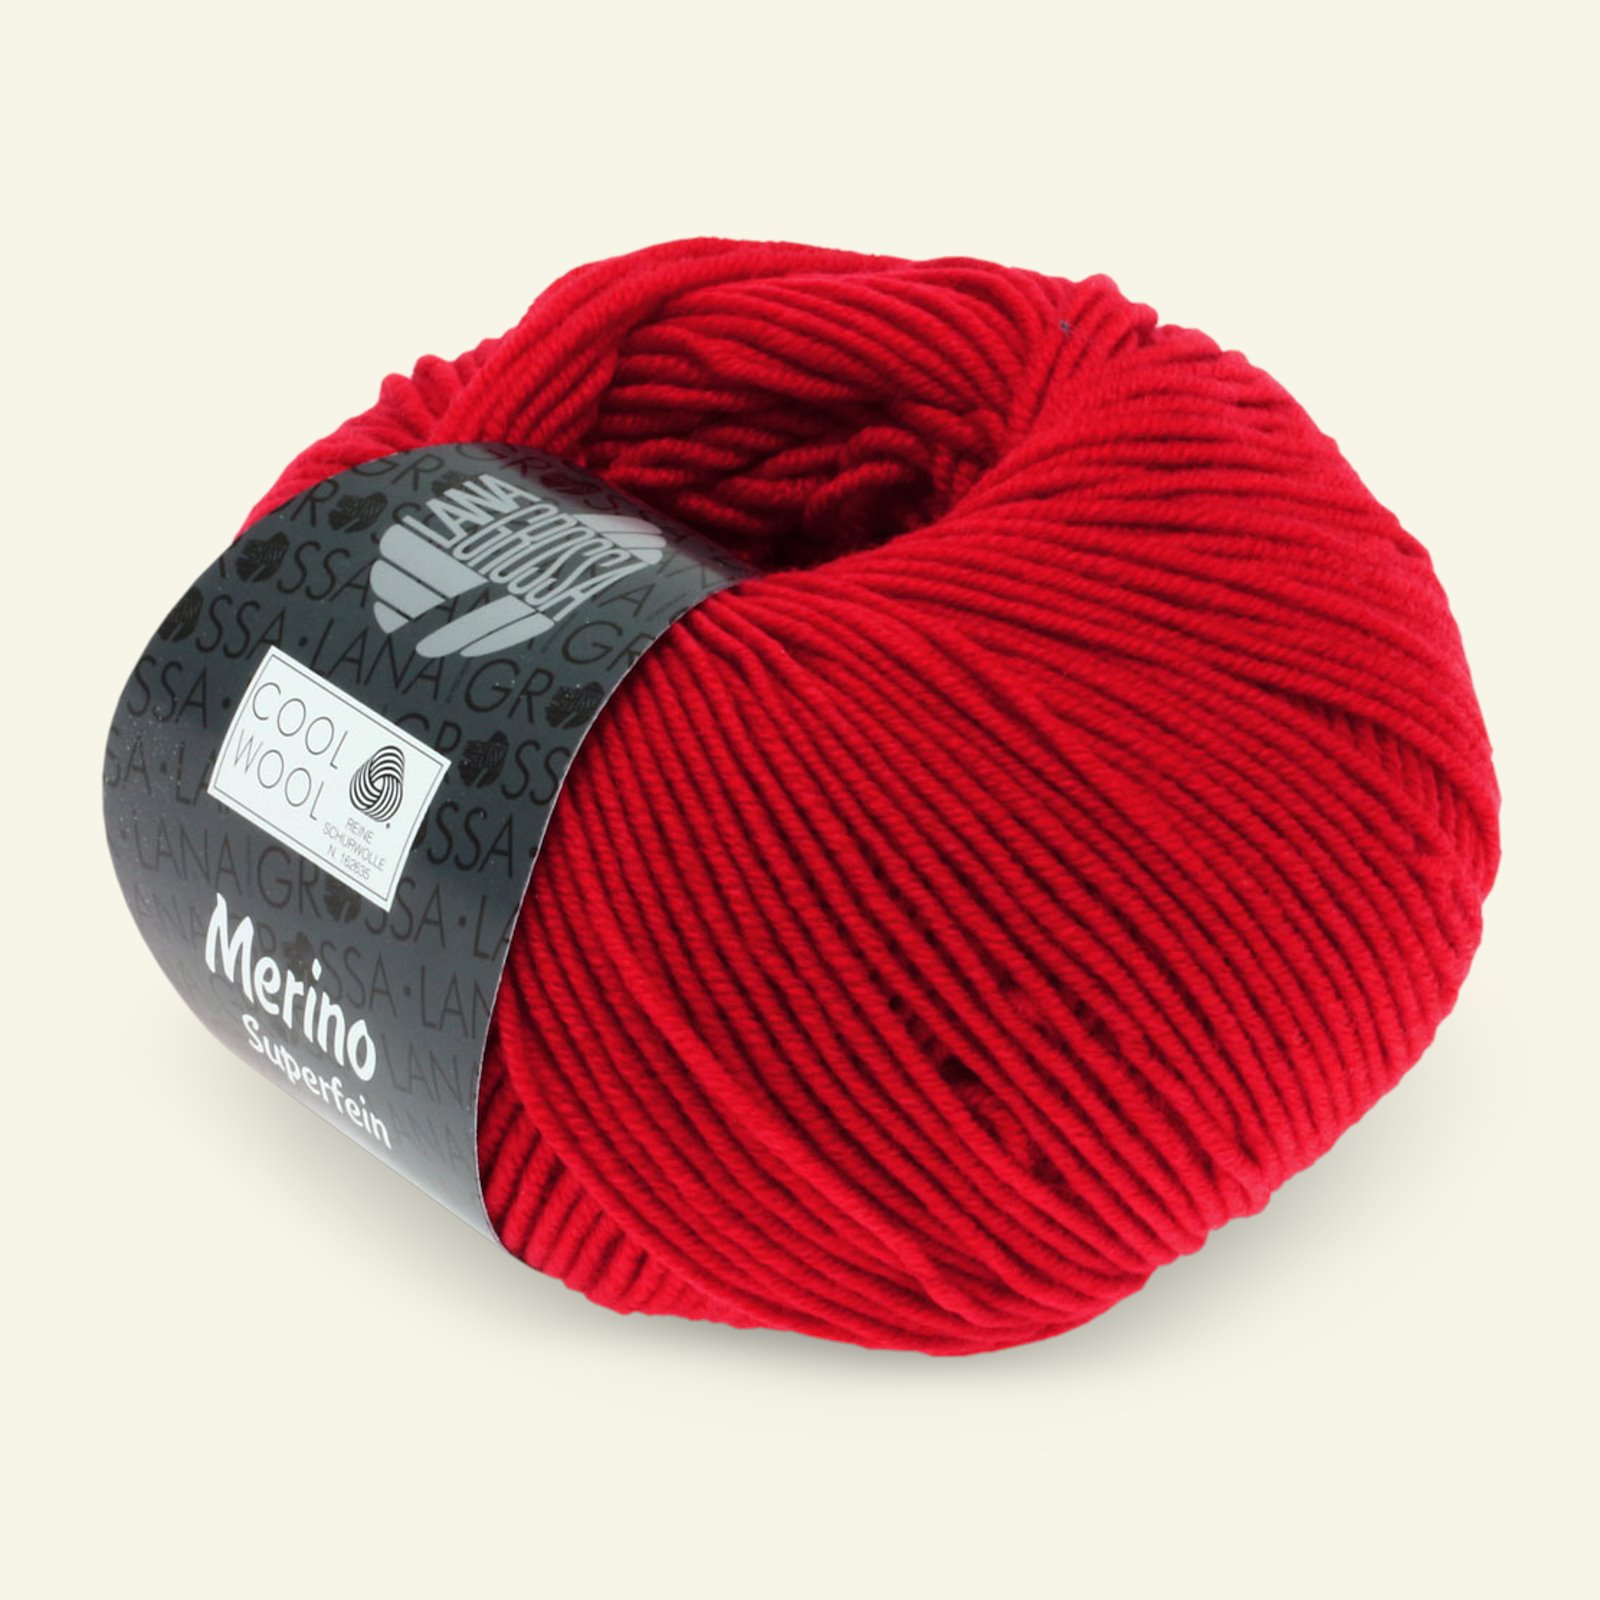 Lana Grossa, extrafine merino wool yarn "Cool Wool", red 90001130_pack